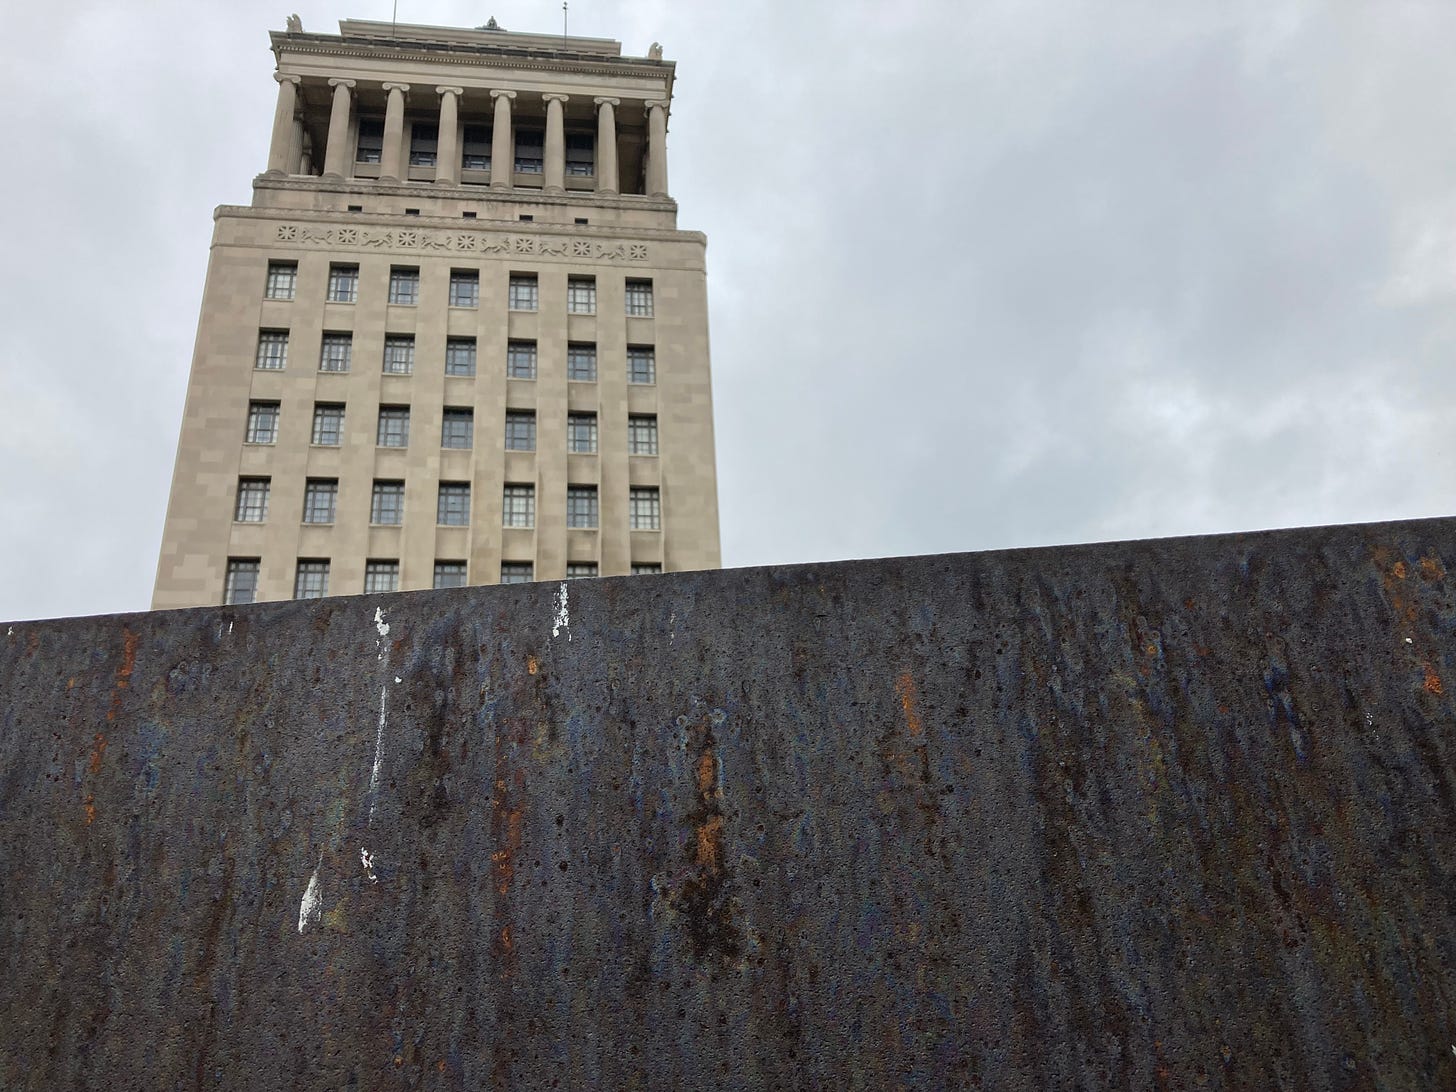 The St. Louis Civil Courts building rises behind the dark, rusting wall of Richard Serra's "Twain" sculpture